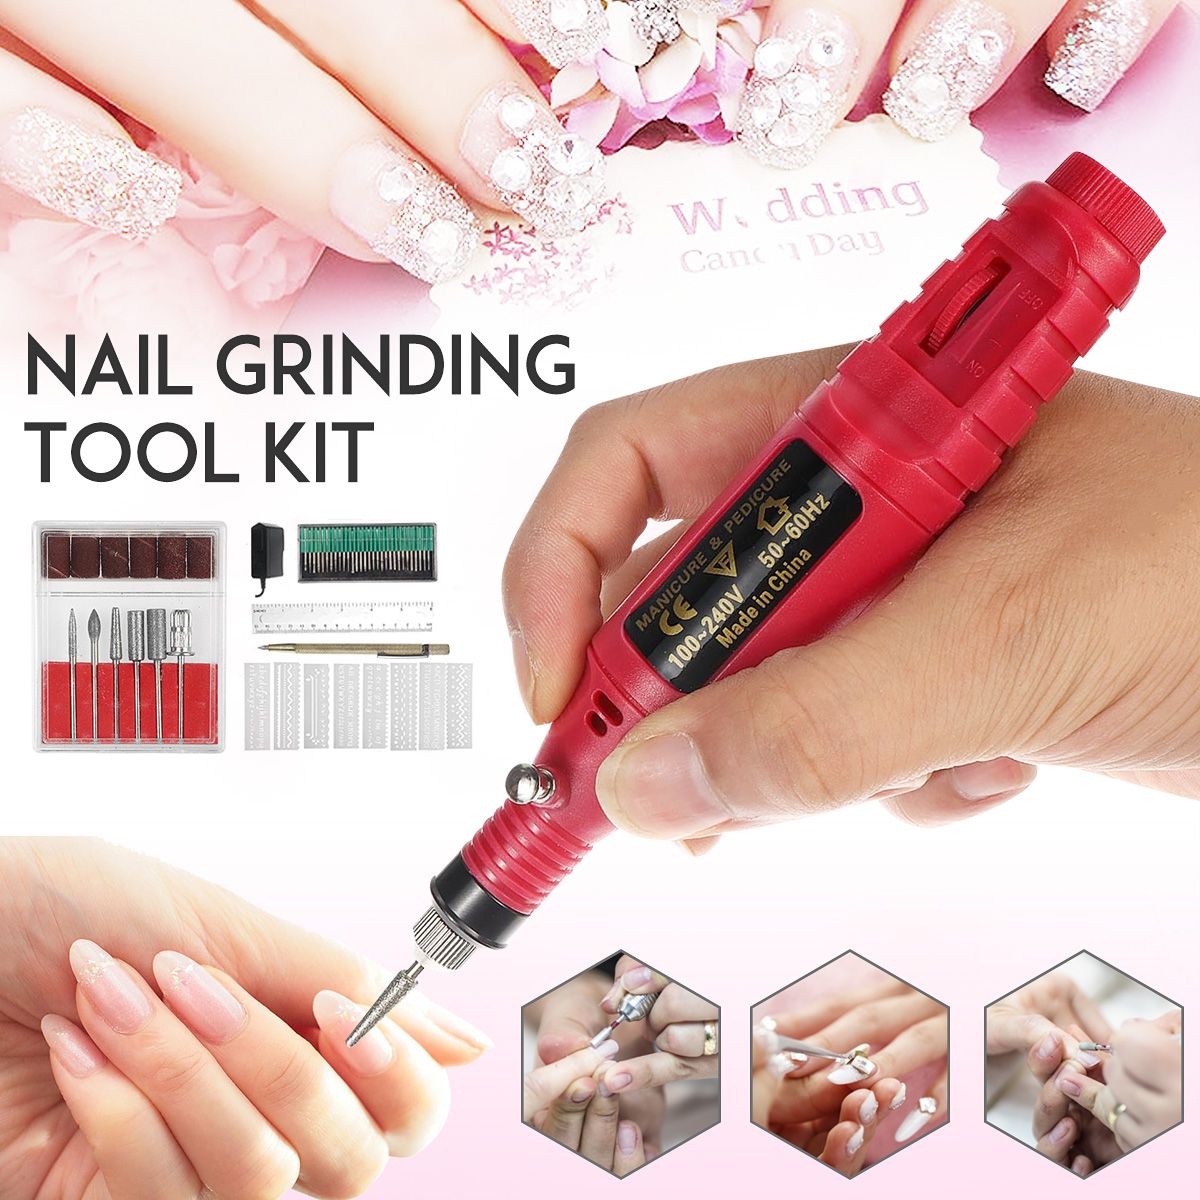 Electric-Nail-Polisher-Machine-Nail-Polishing-Engraving-Manicure-Pedicure-Tool-1741696